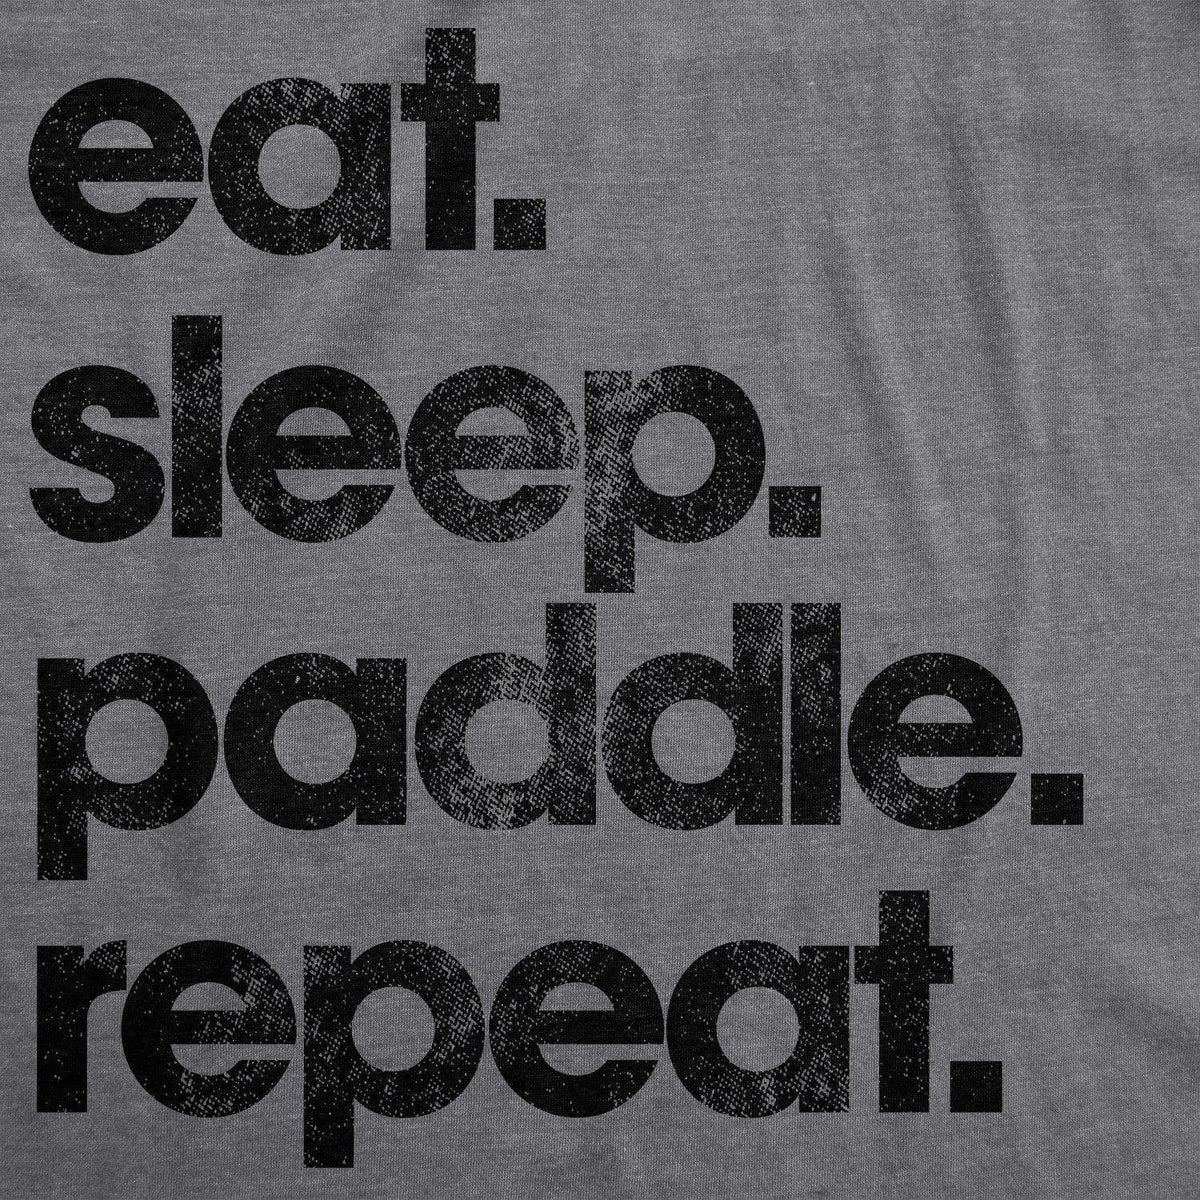 Eat Sleep Paddle Repeat Women&#39;s Tshirt - Crazy Dog T-Shirts